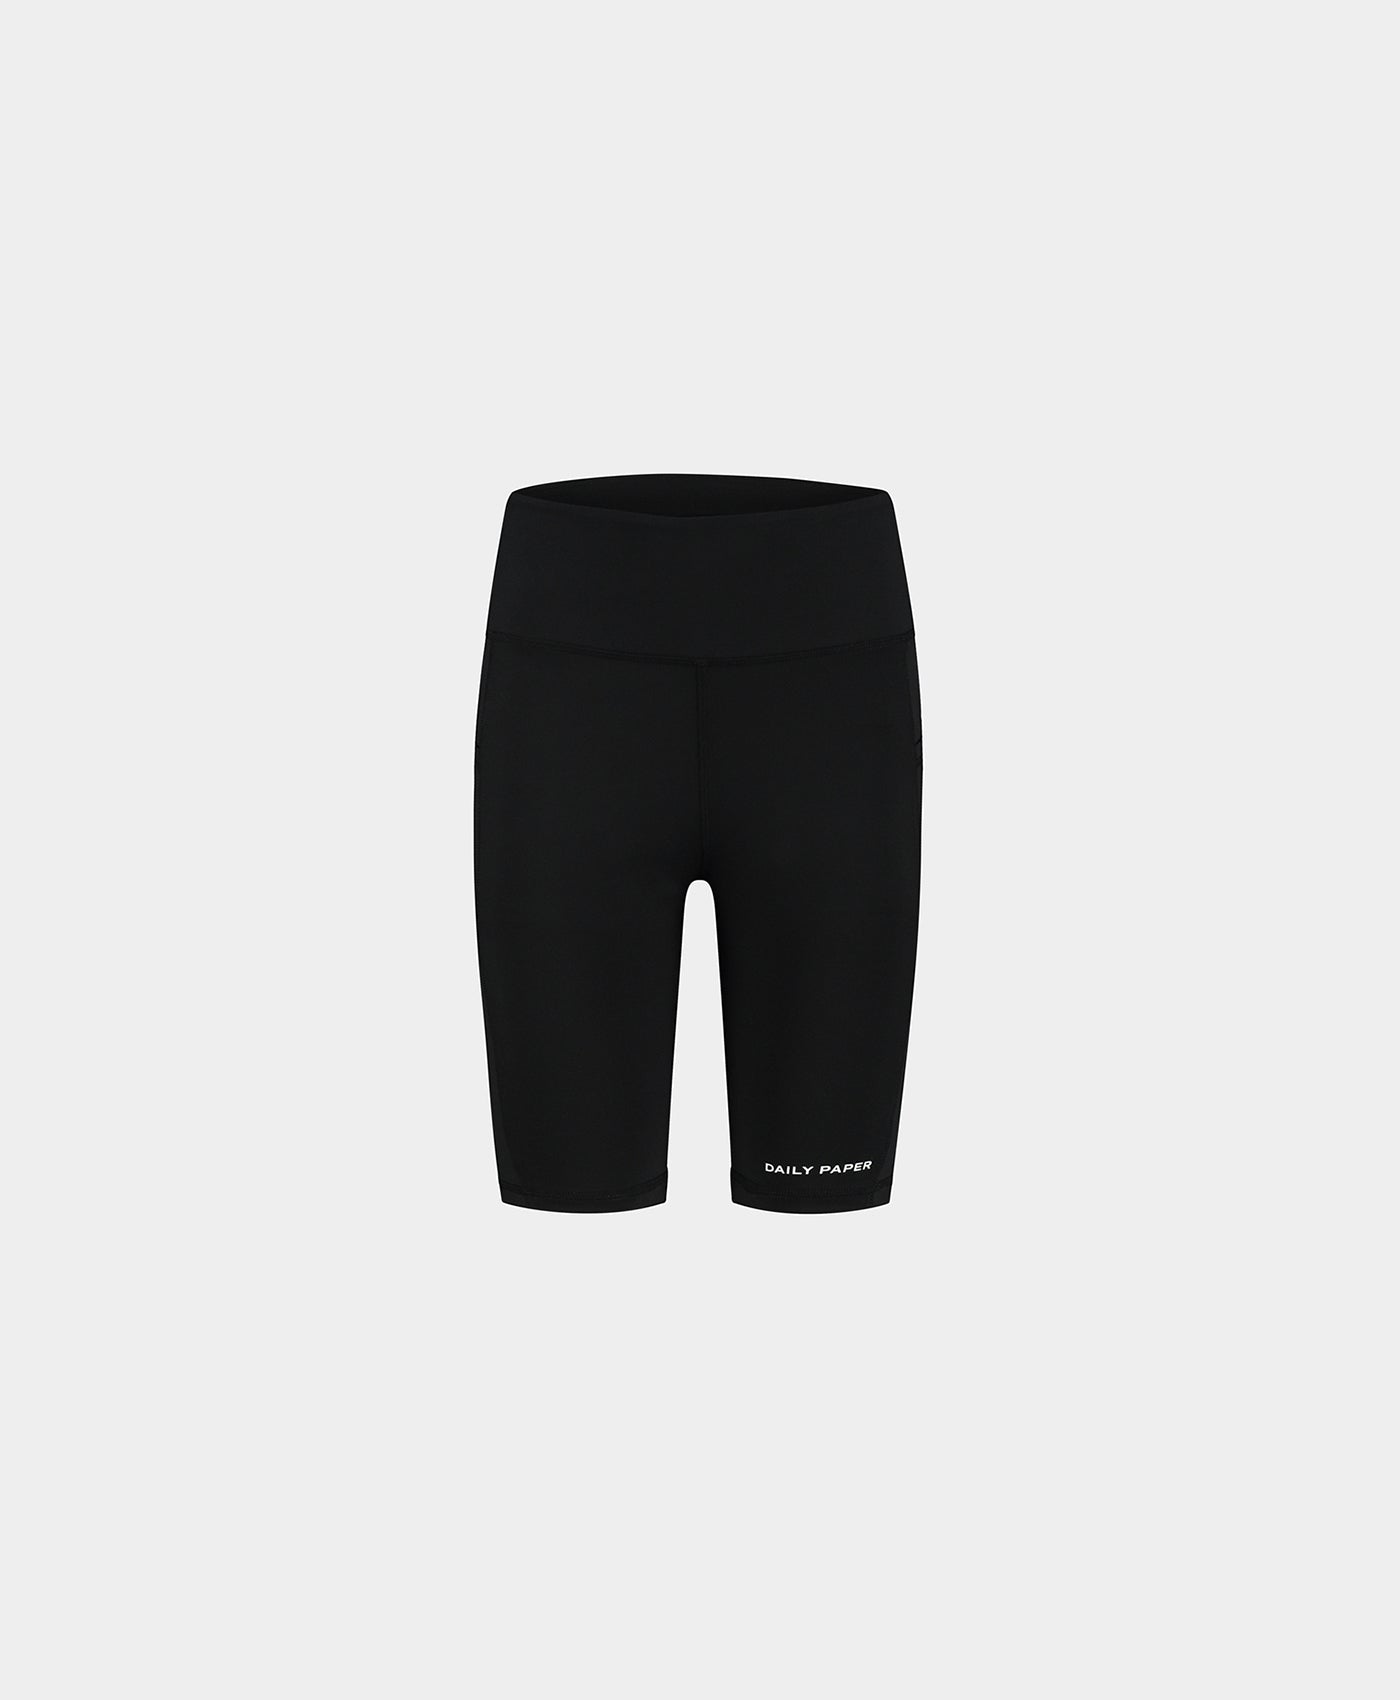 DP - Black Erica Cycle Shorts - Packshot - Front